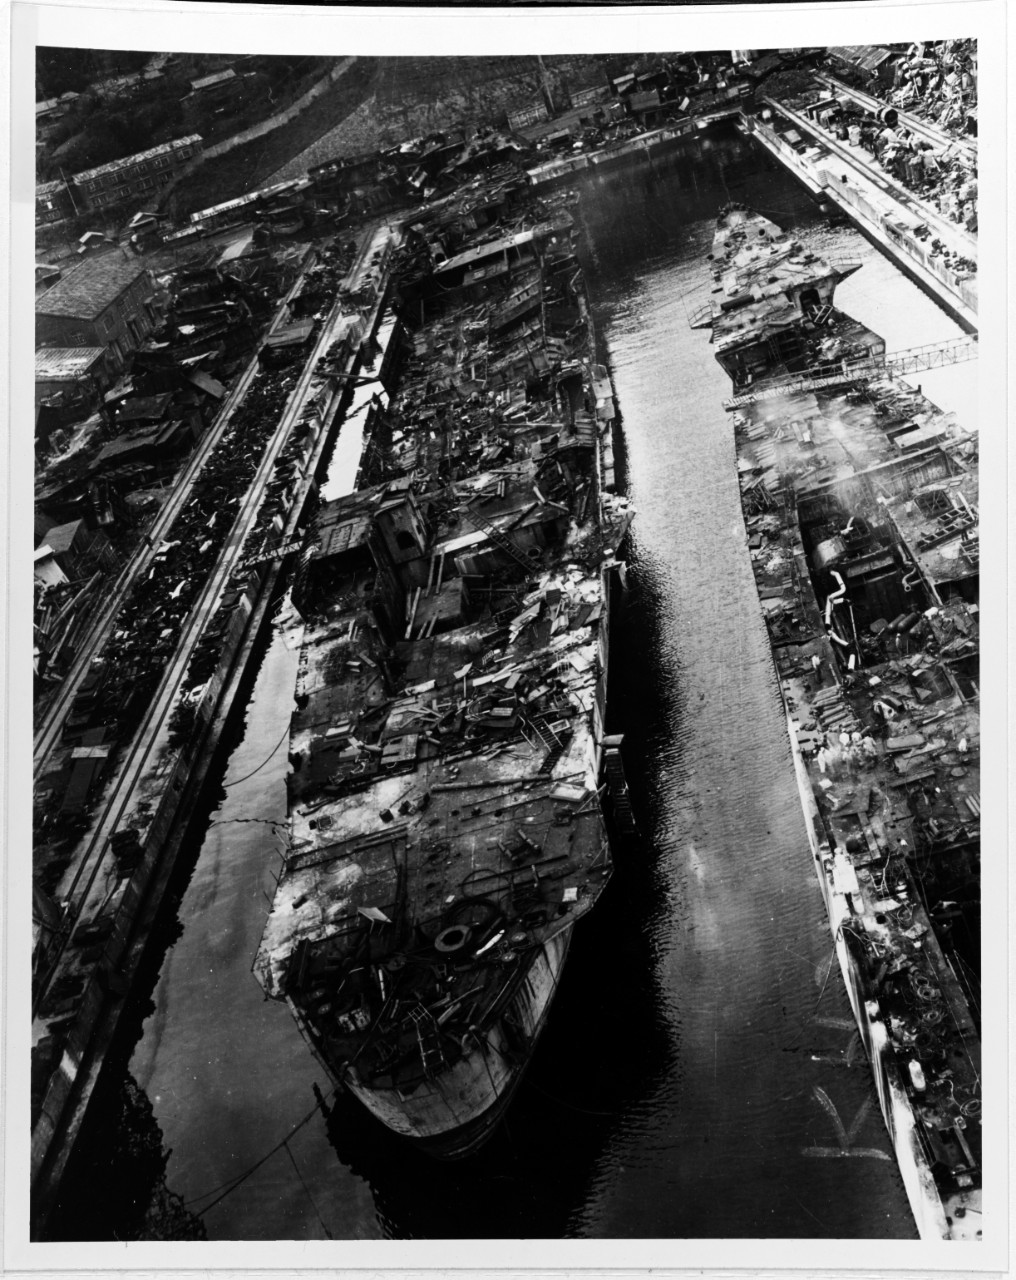 KASAGI (Japanese aircraft carrier, 1944-47) and IBUKI (Japanese aircraft carrier, 1943-1947)